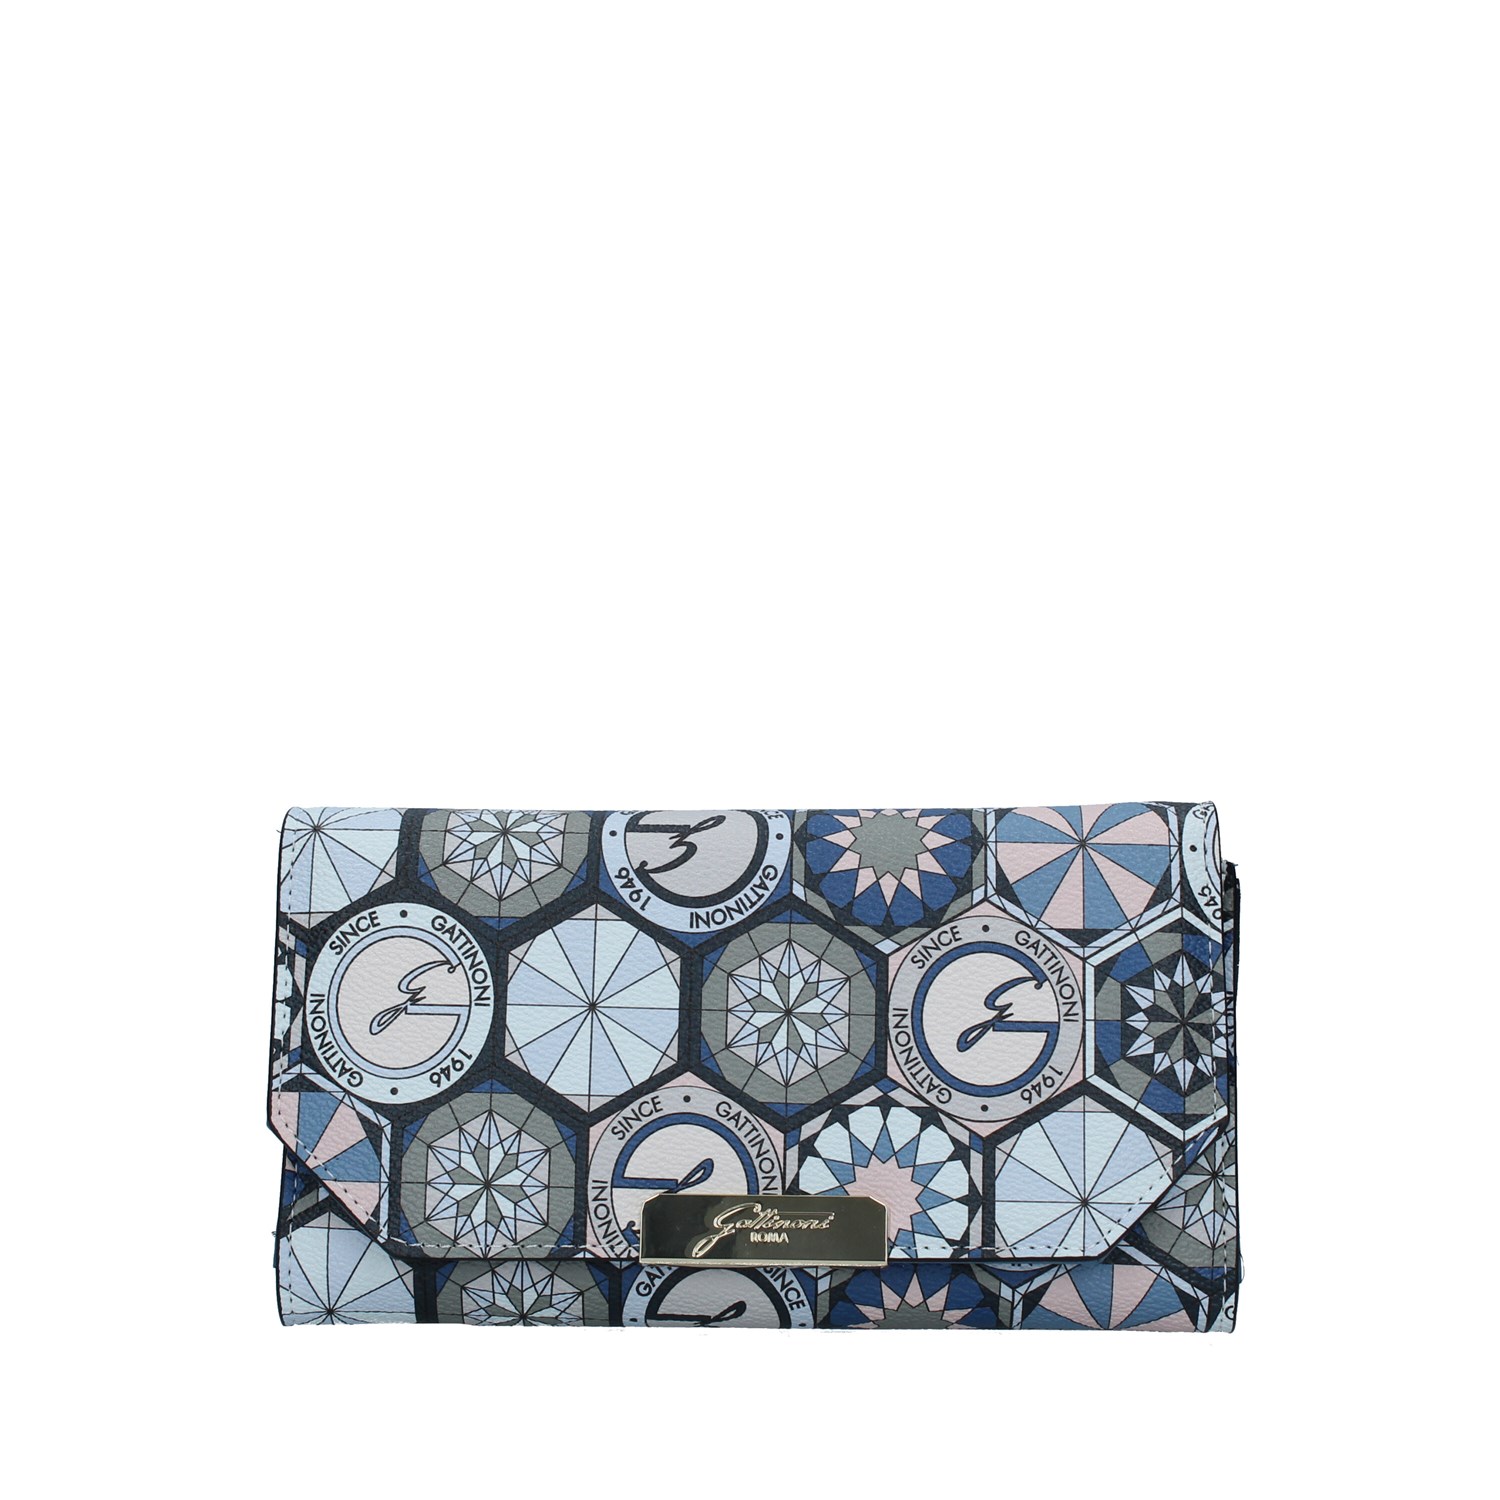 Gattinoni Roma Accessories Accessories Women's Wallets BLUE BINTD7639WZ